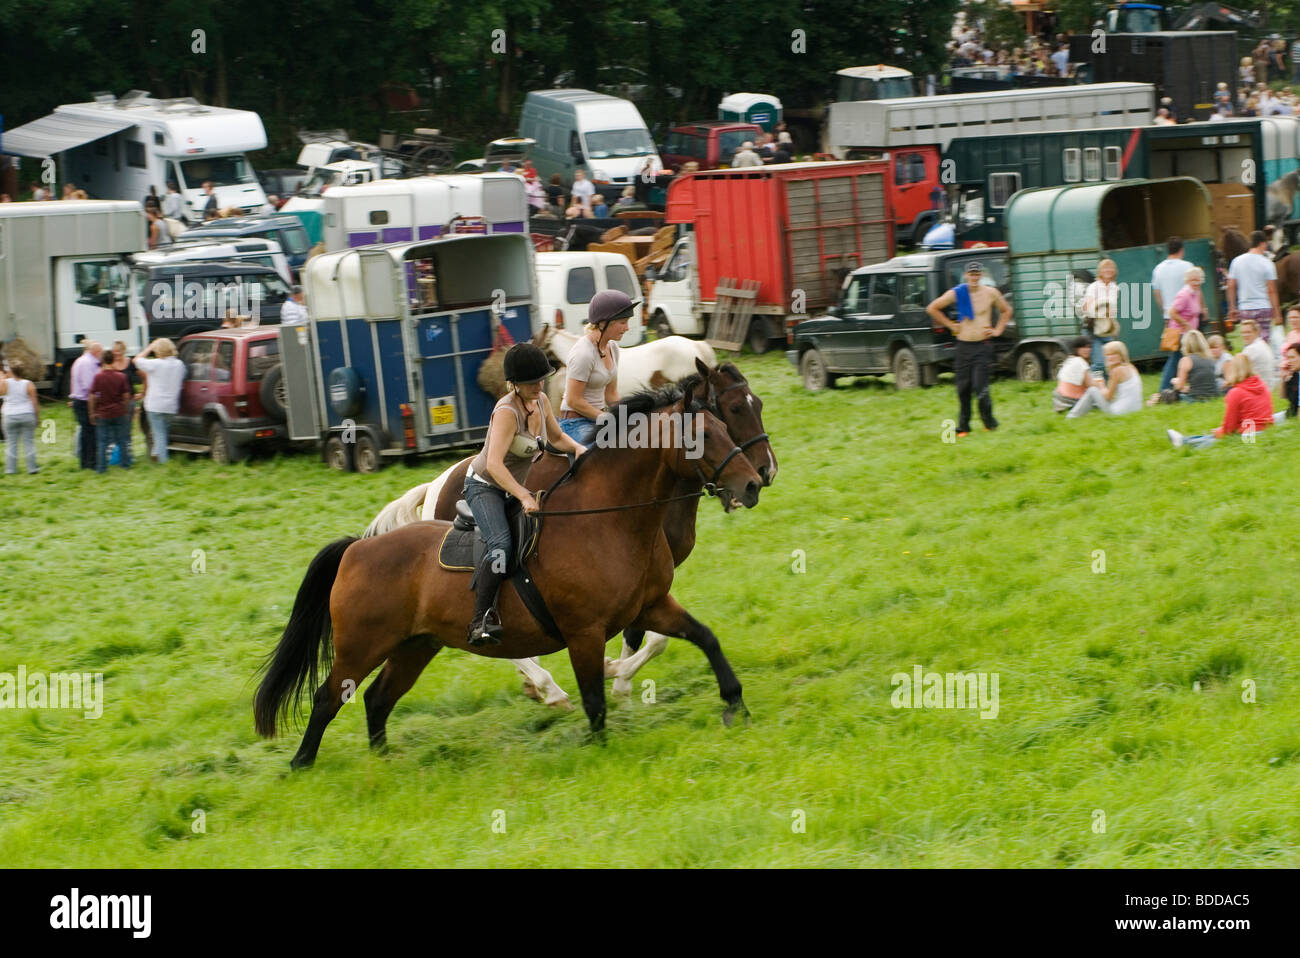 Young girls horseback riding. Priddy Horse Fair Mendip Hills, Somerset Uk 20009 2000s HOMER SYKES Stock Photo